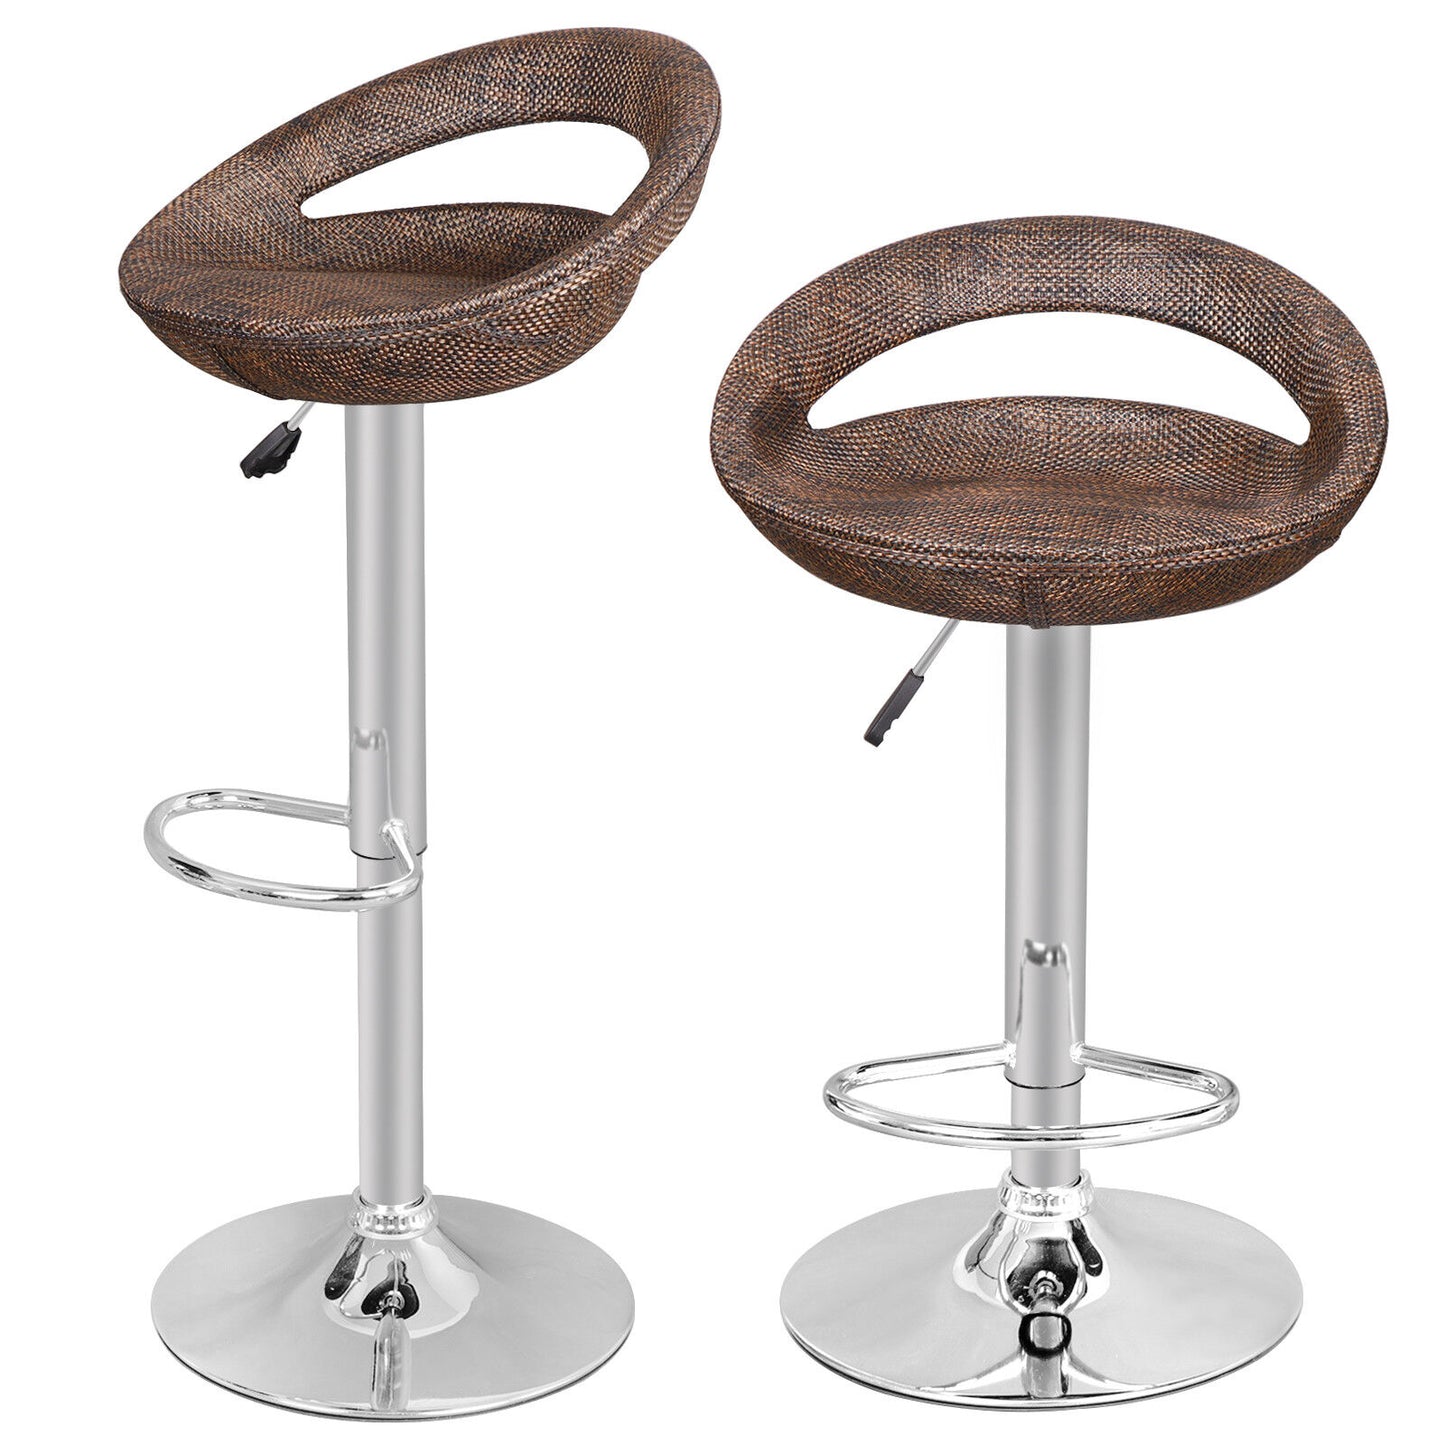 Set of 4 ABS Rattan Wicker Swivel Bar Stool Modern Adjustable Height Chairs Pub